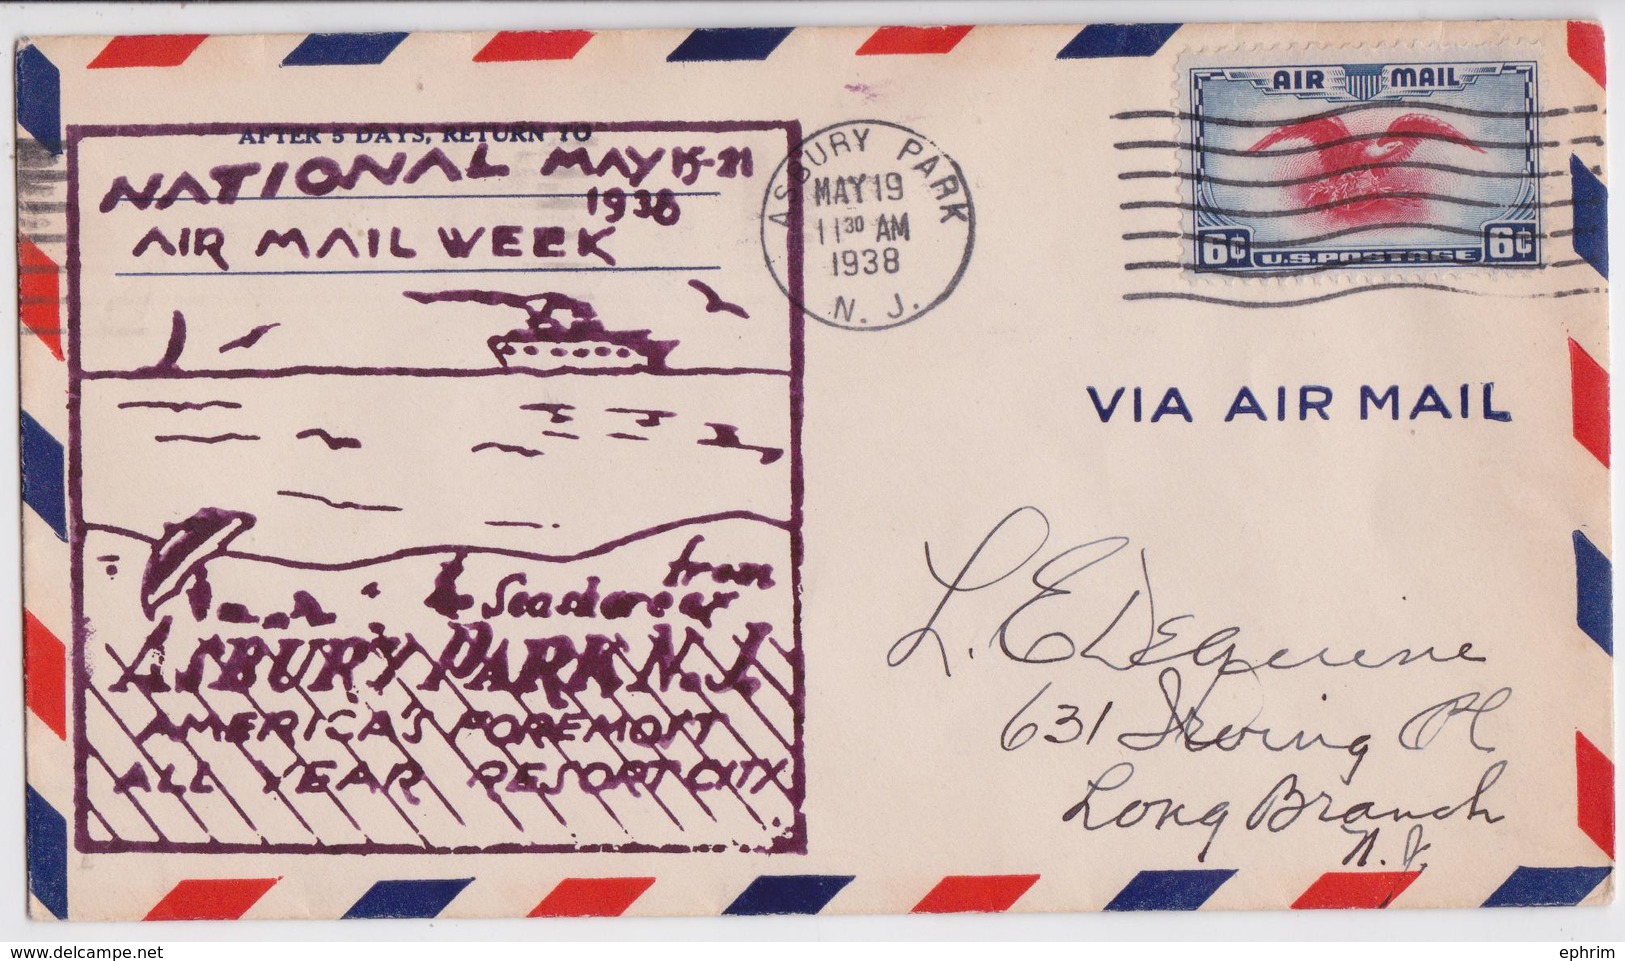 ASHBURY PARK NEW JERSEY RESORT CITY AIR MAIL WEEK COMMEMORATIVE COVER 1938 TO LONG BRANCH VIA NEWARK - Enveloppes évenementielles